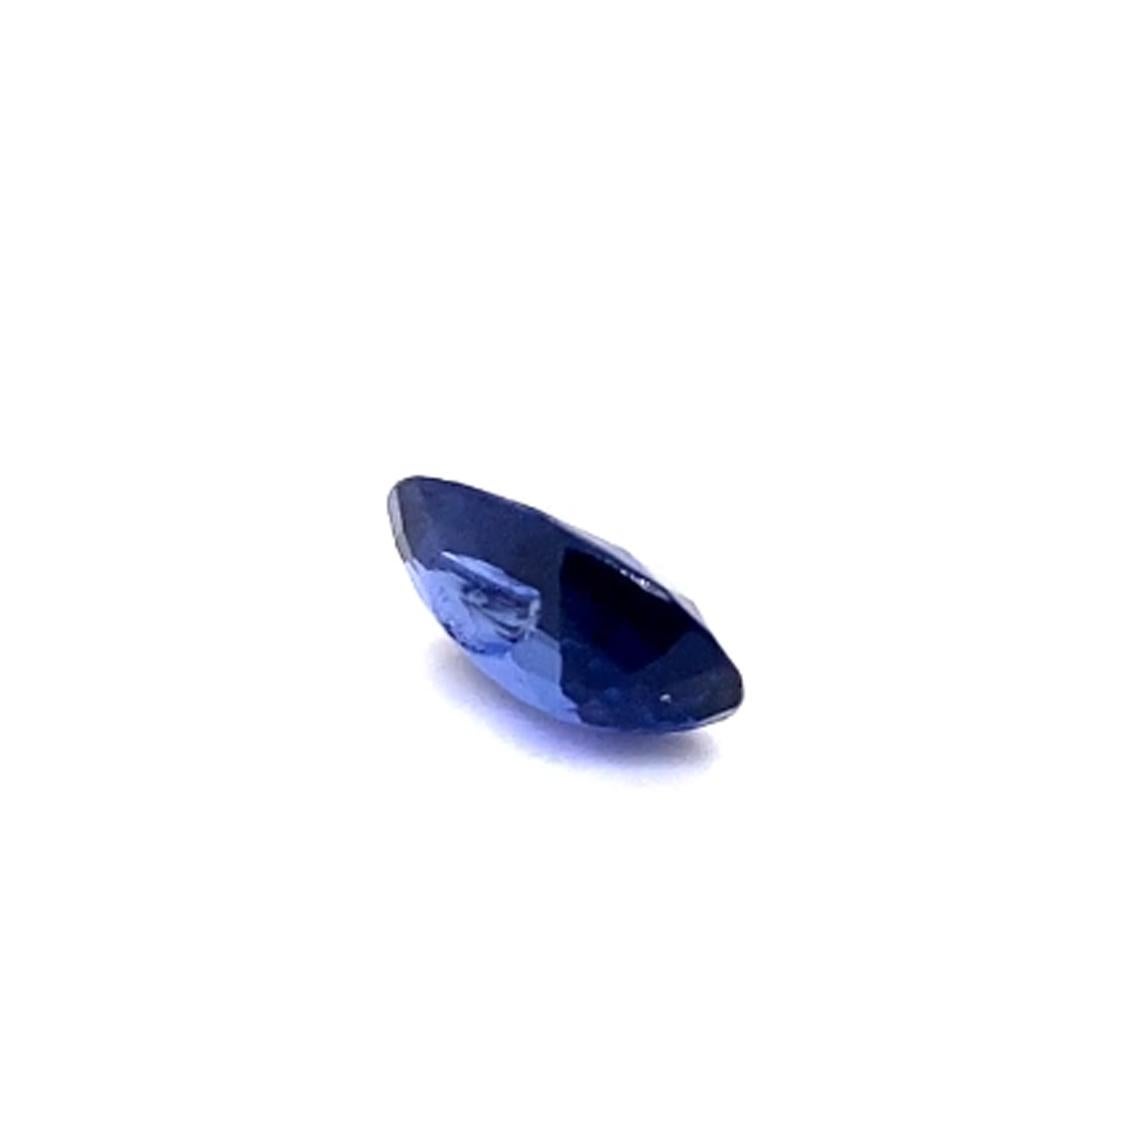 Oval Cut Bellerophon Gemlab Certified 4.34ct Blue Sapphire Natural Gemstone For Sale